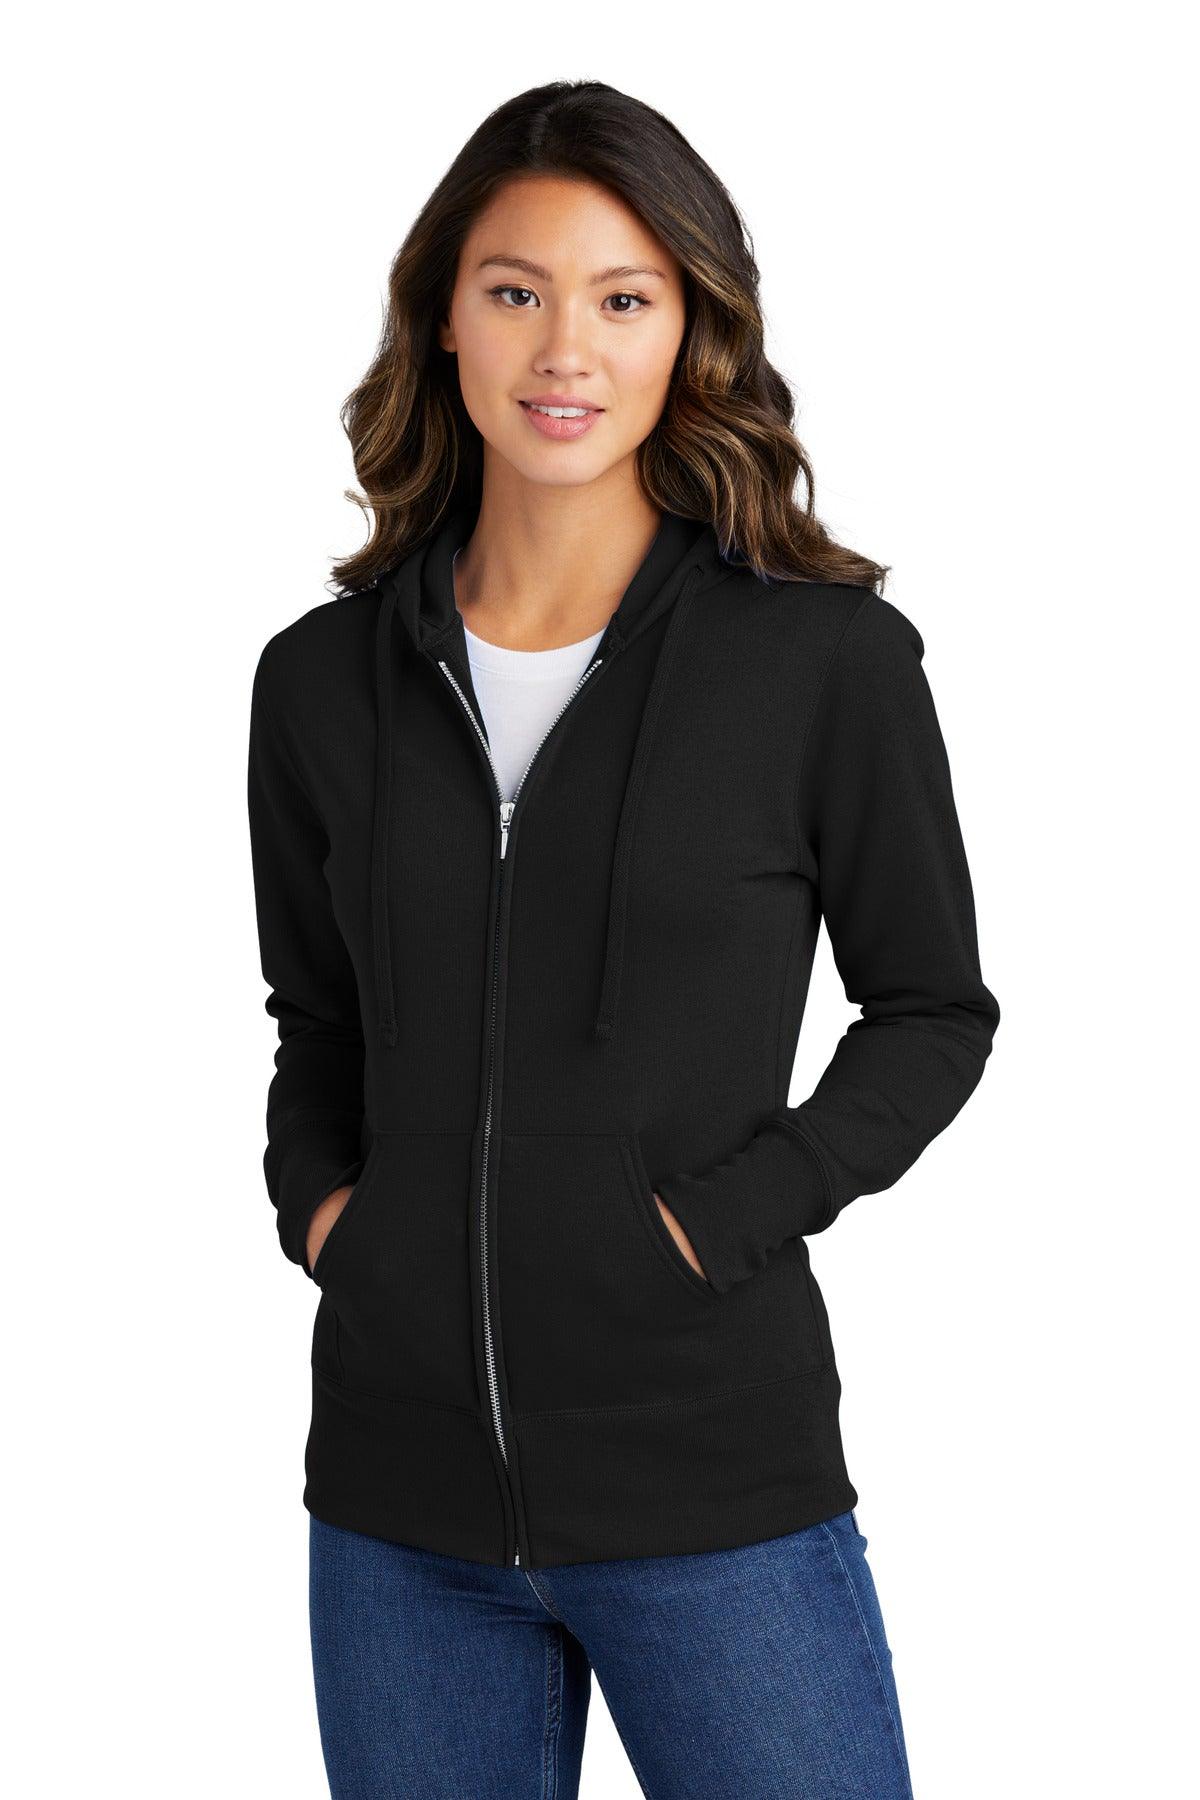 Port & Company Ladies Core Fleece Full-Zip Hooded Sweatshirt. LPC78ZH - Dresses Max